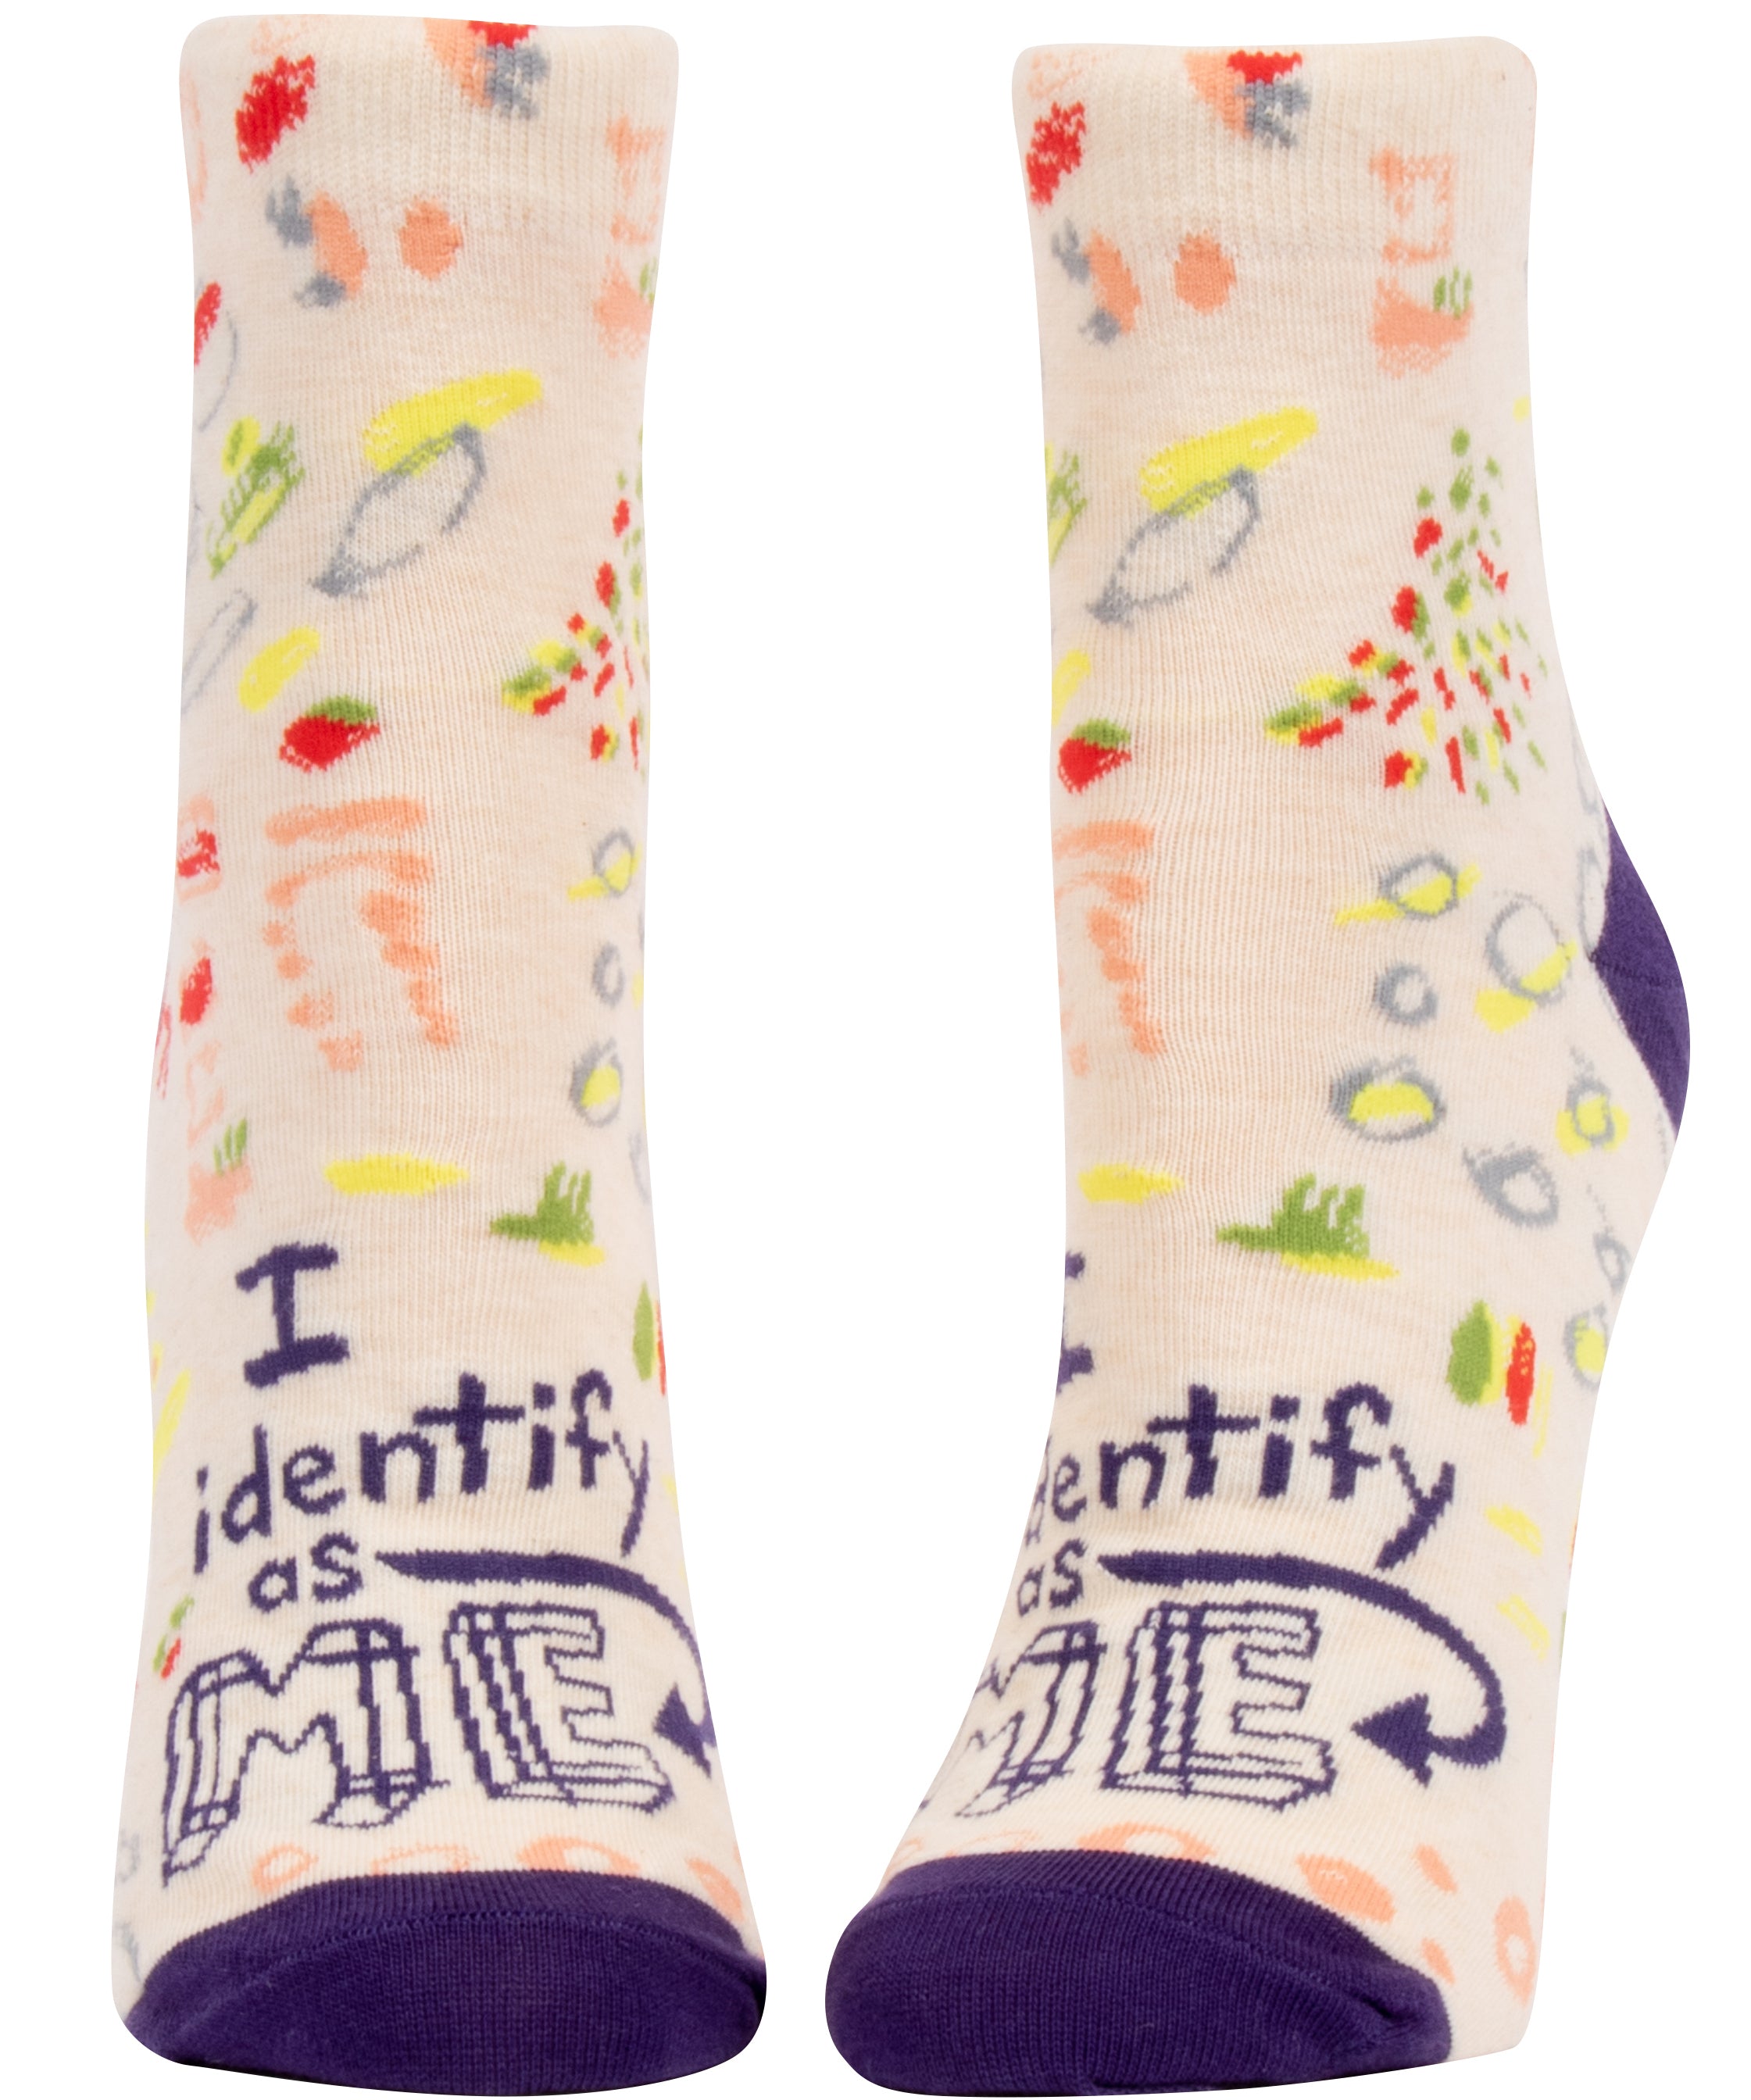 Blue Q - Ankle Socks - I identify as me